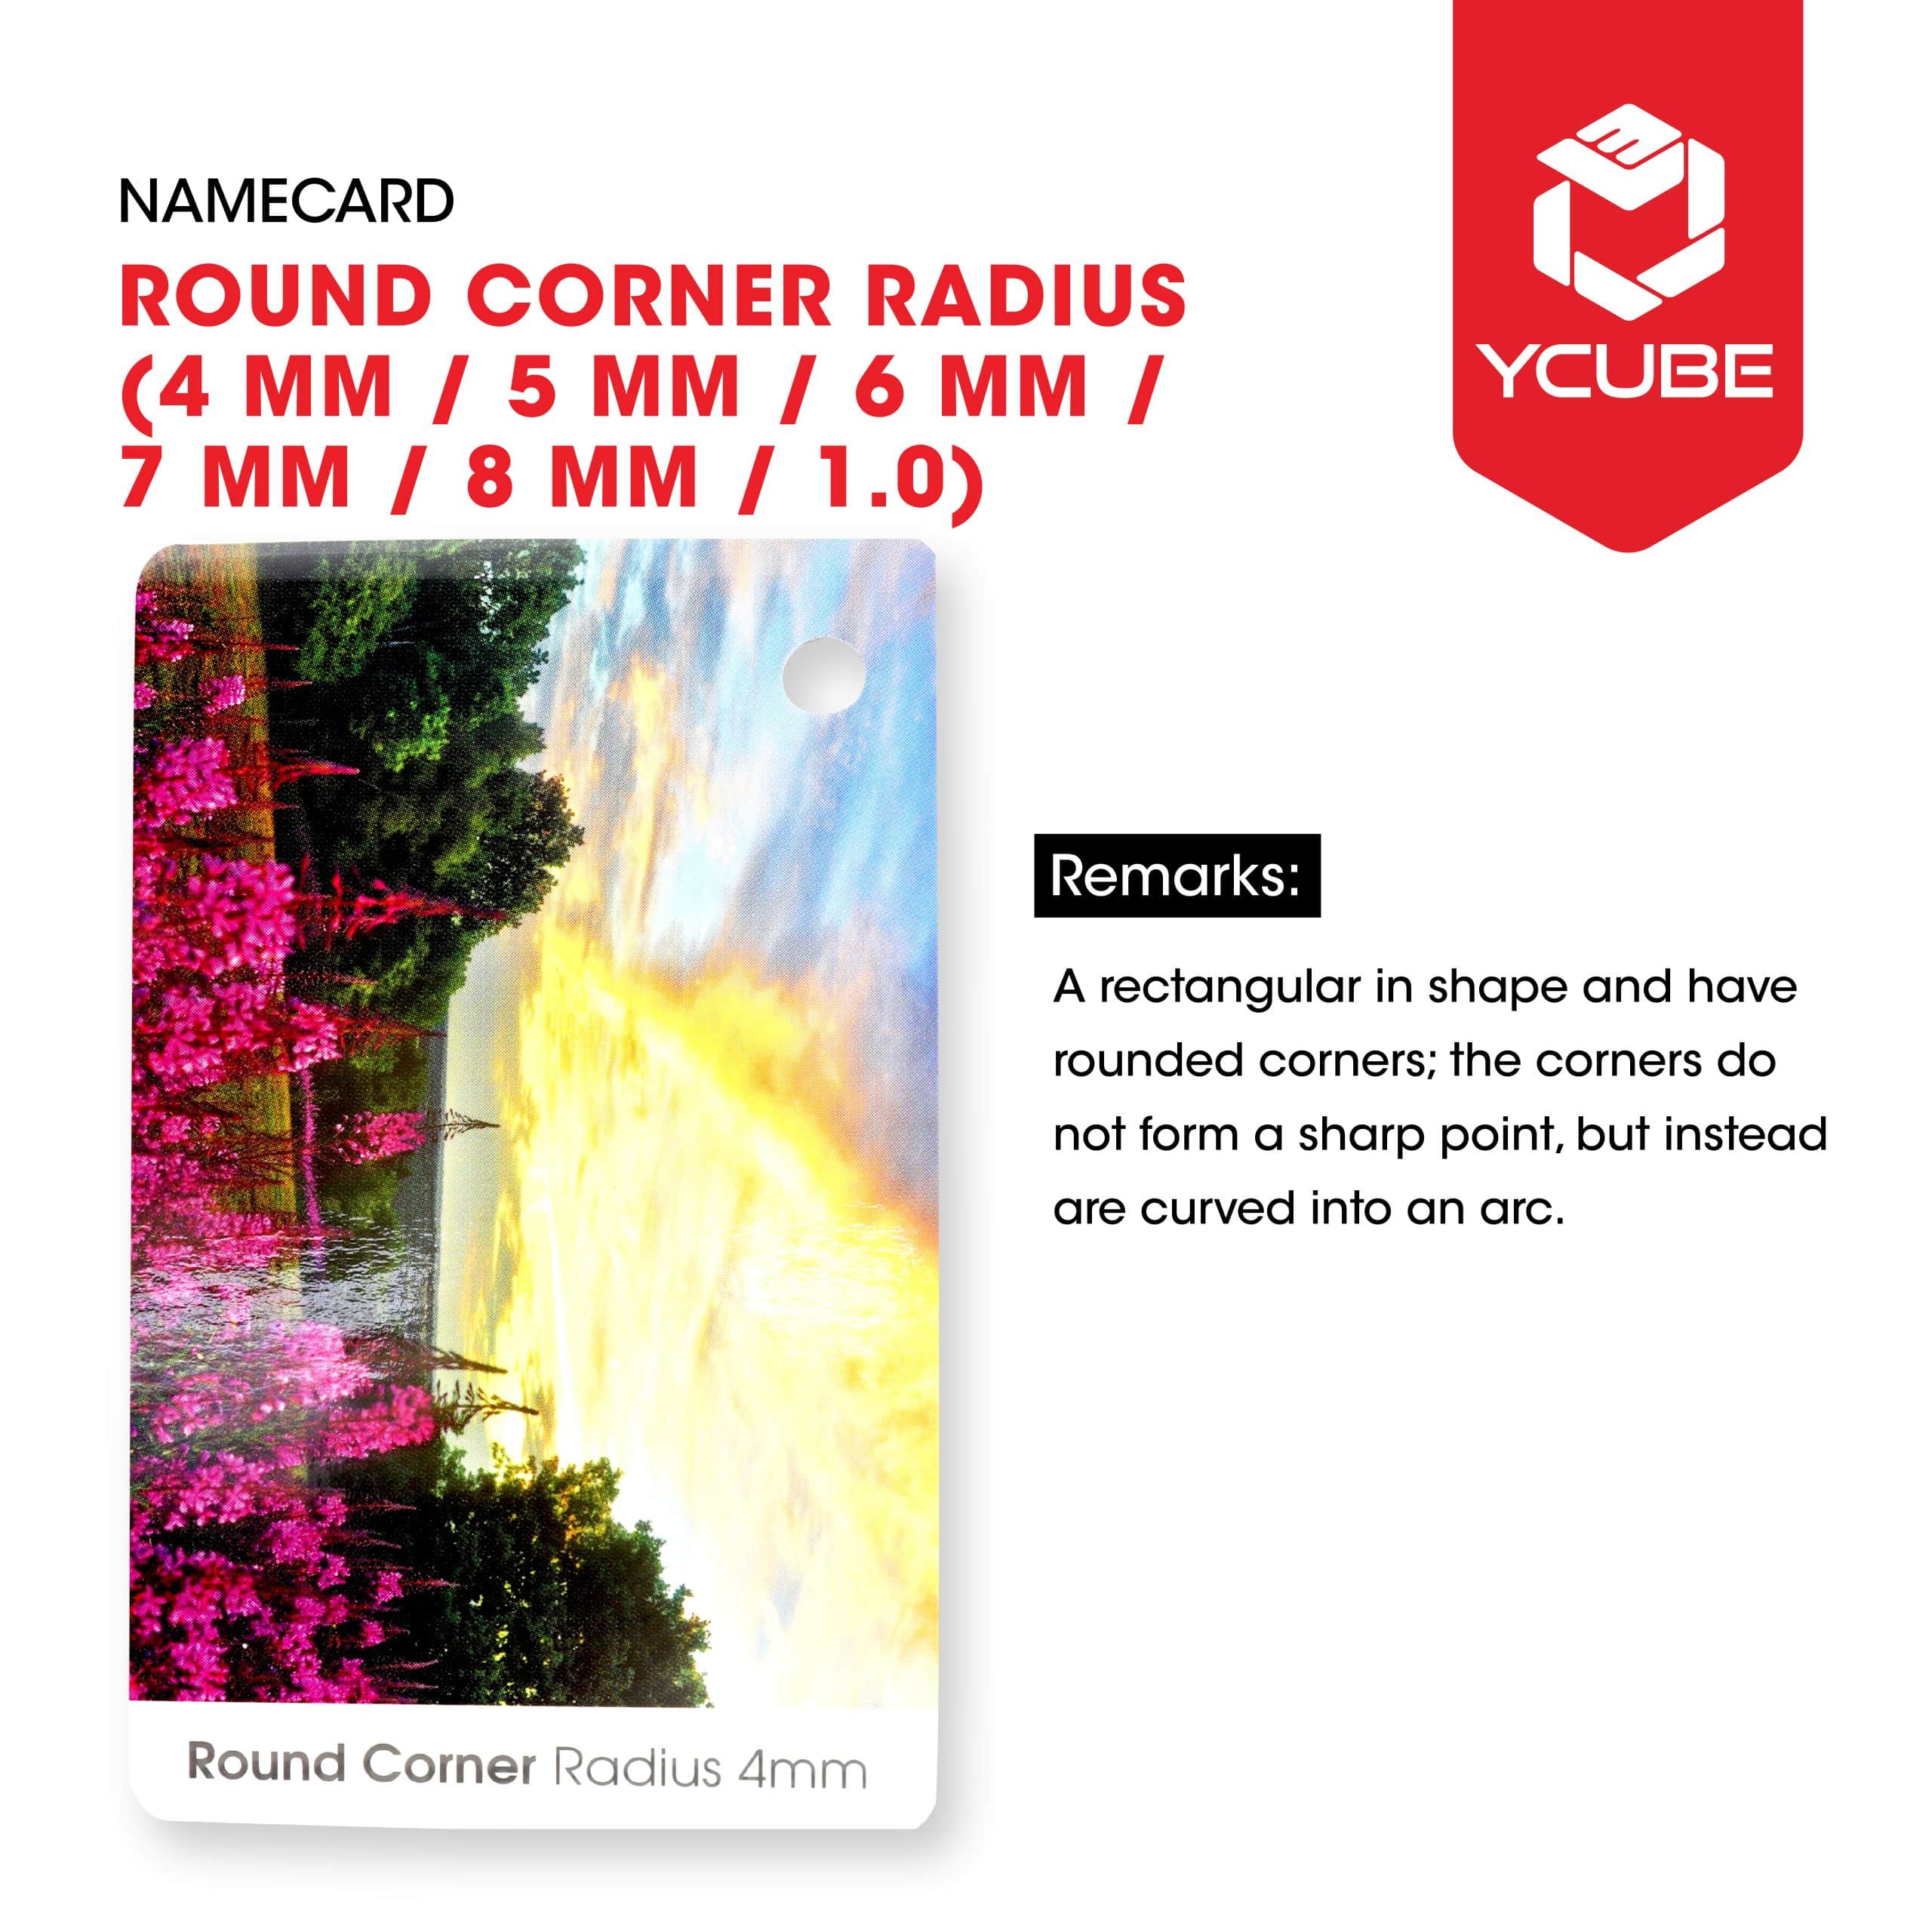 Namecard Round Corner Radius